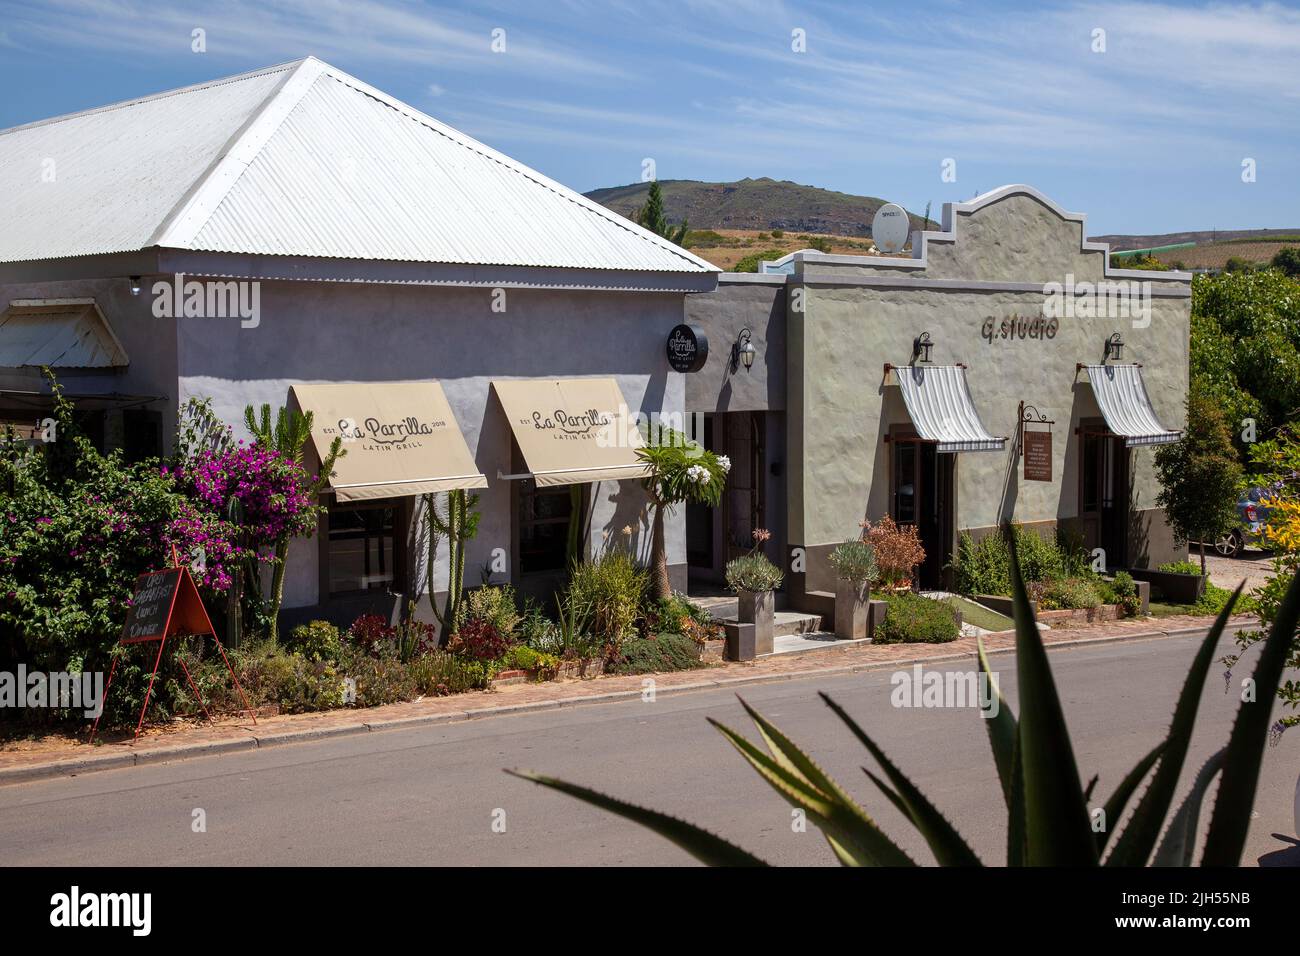 La Parrilla Restaurant on Hoof St in Riebeek Kasteel, Western Cape - South Africa Stock Photo